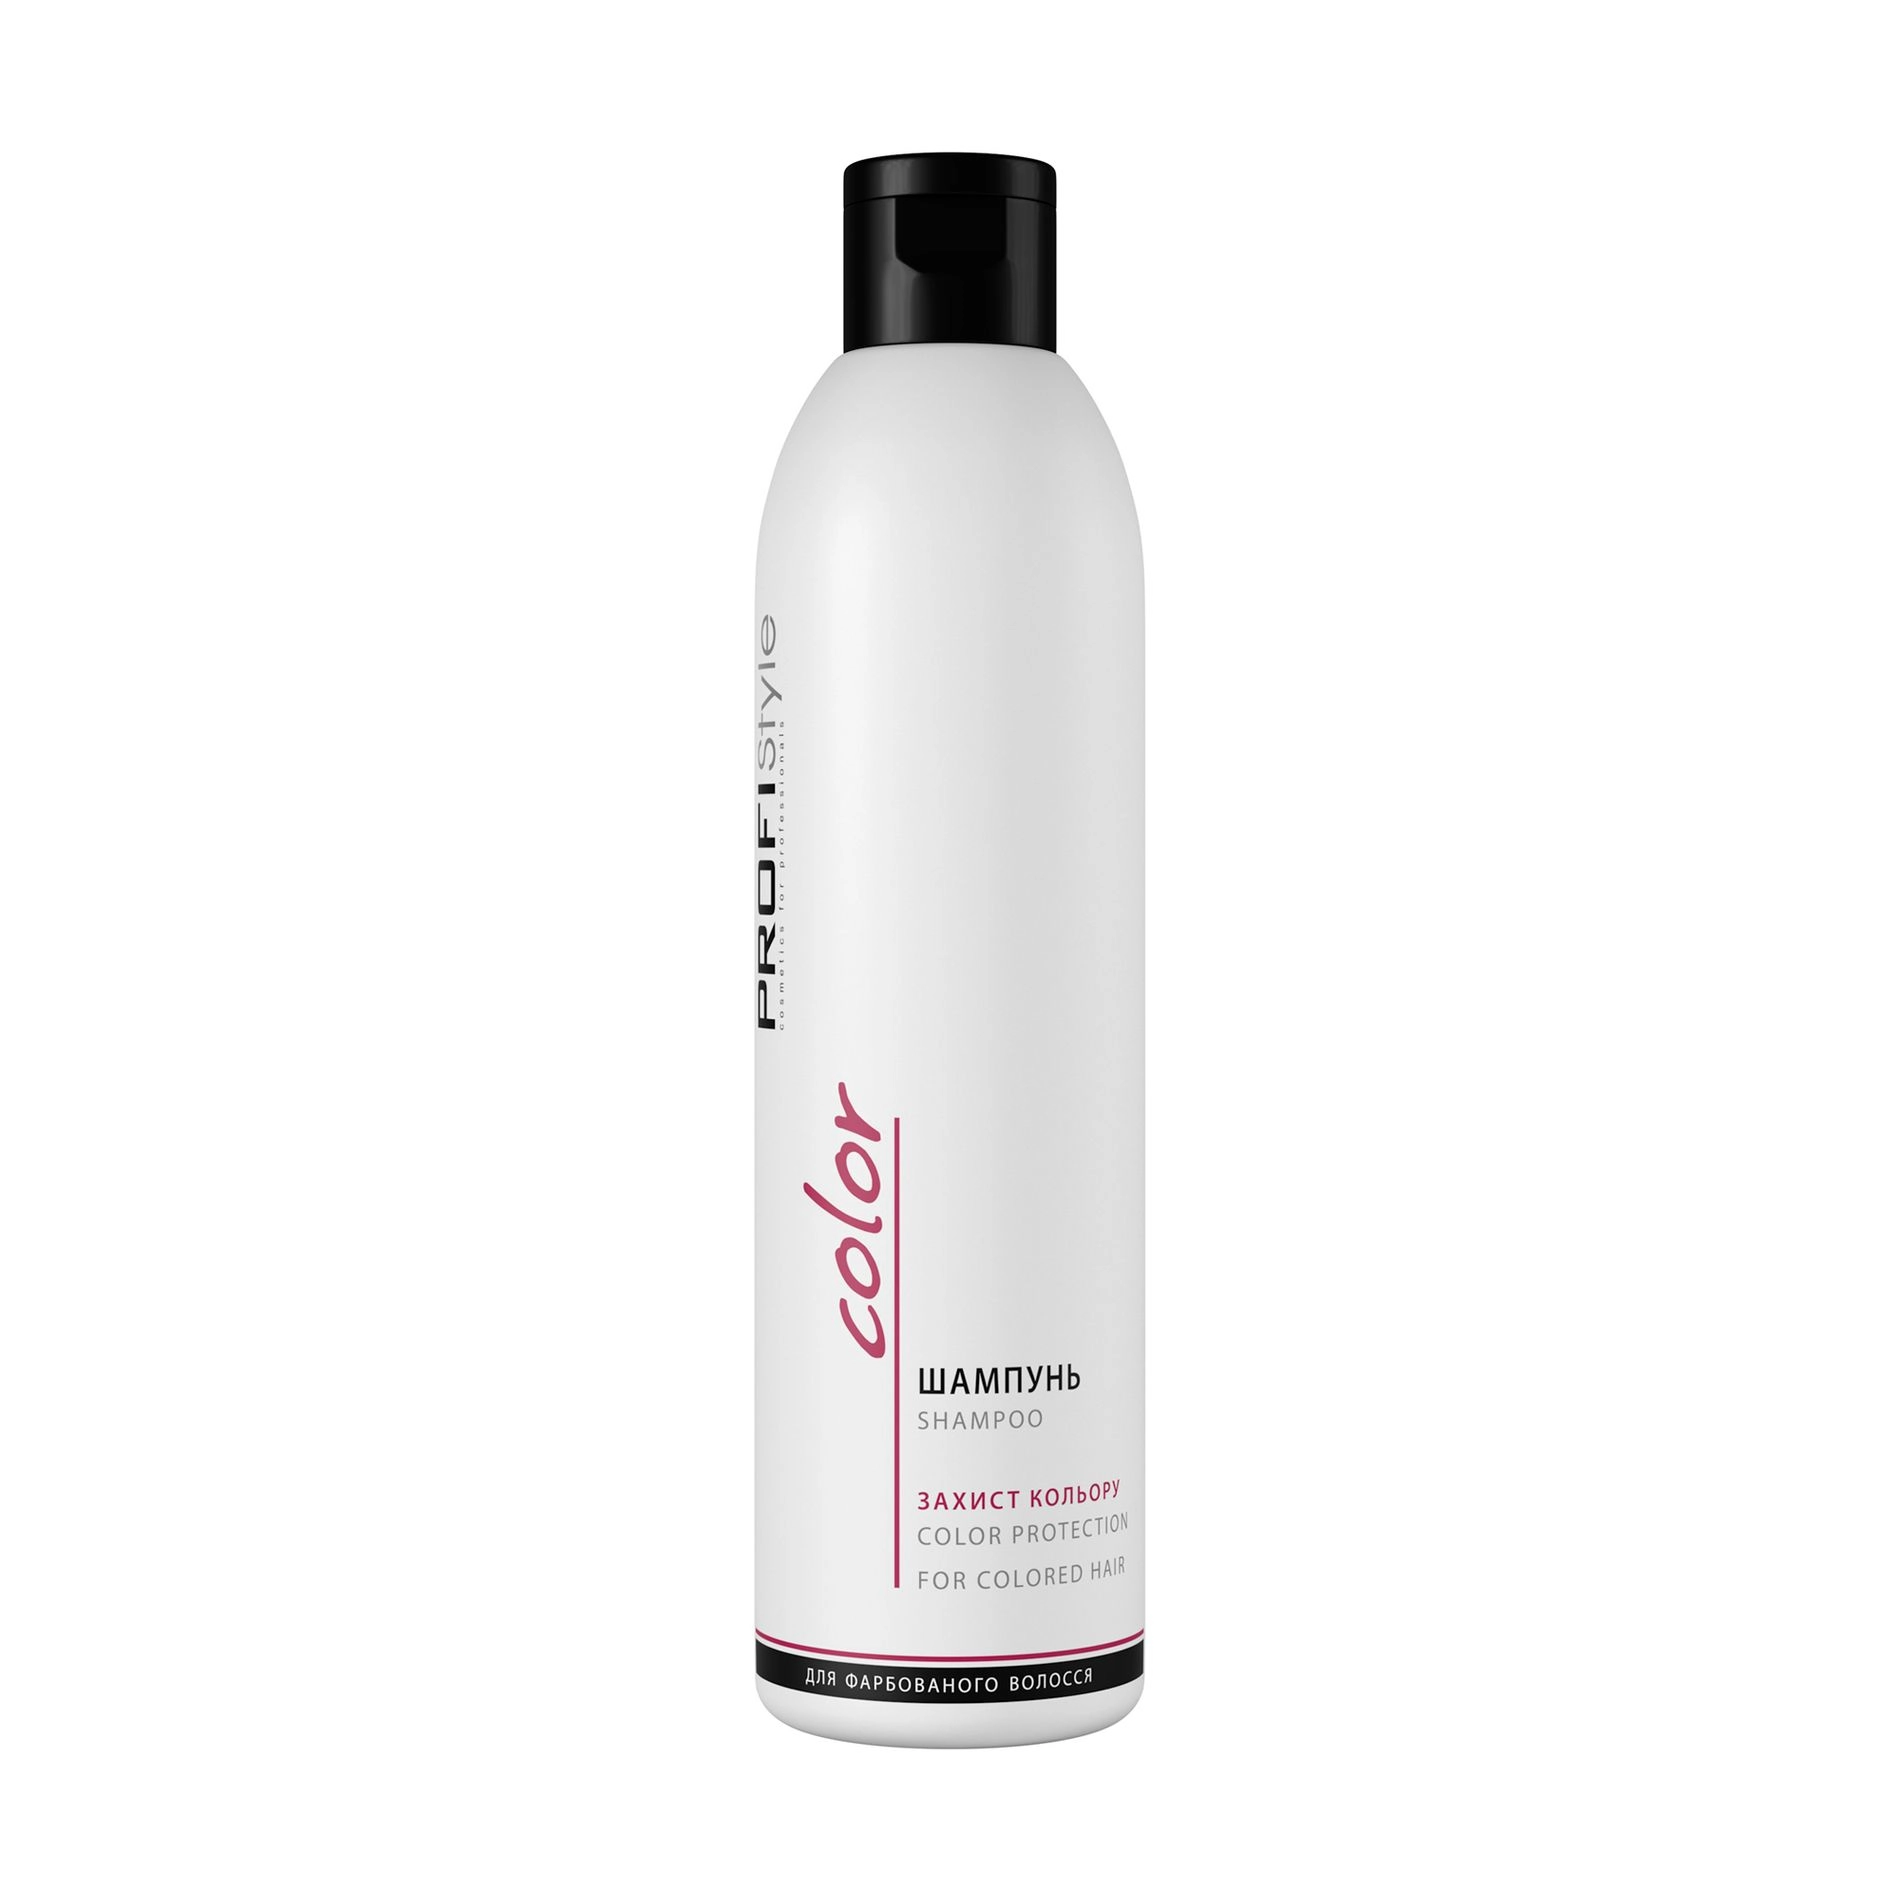 Profi Style Шампунь Color Protection Shampoo защита цвета, для окрашенных волос - фото N1